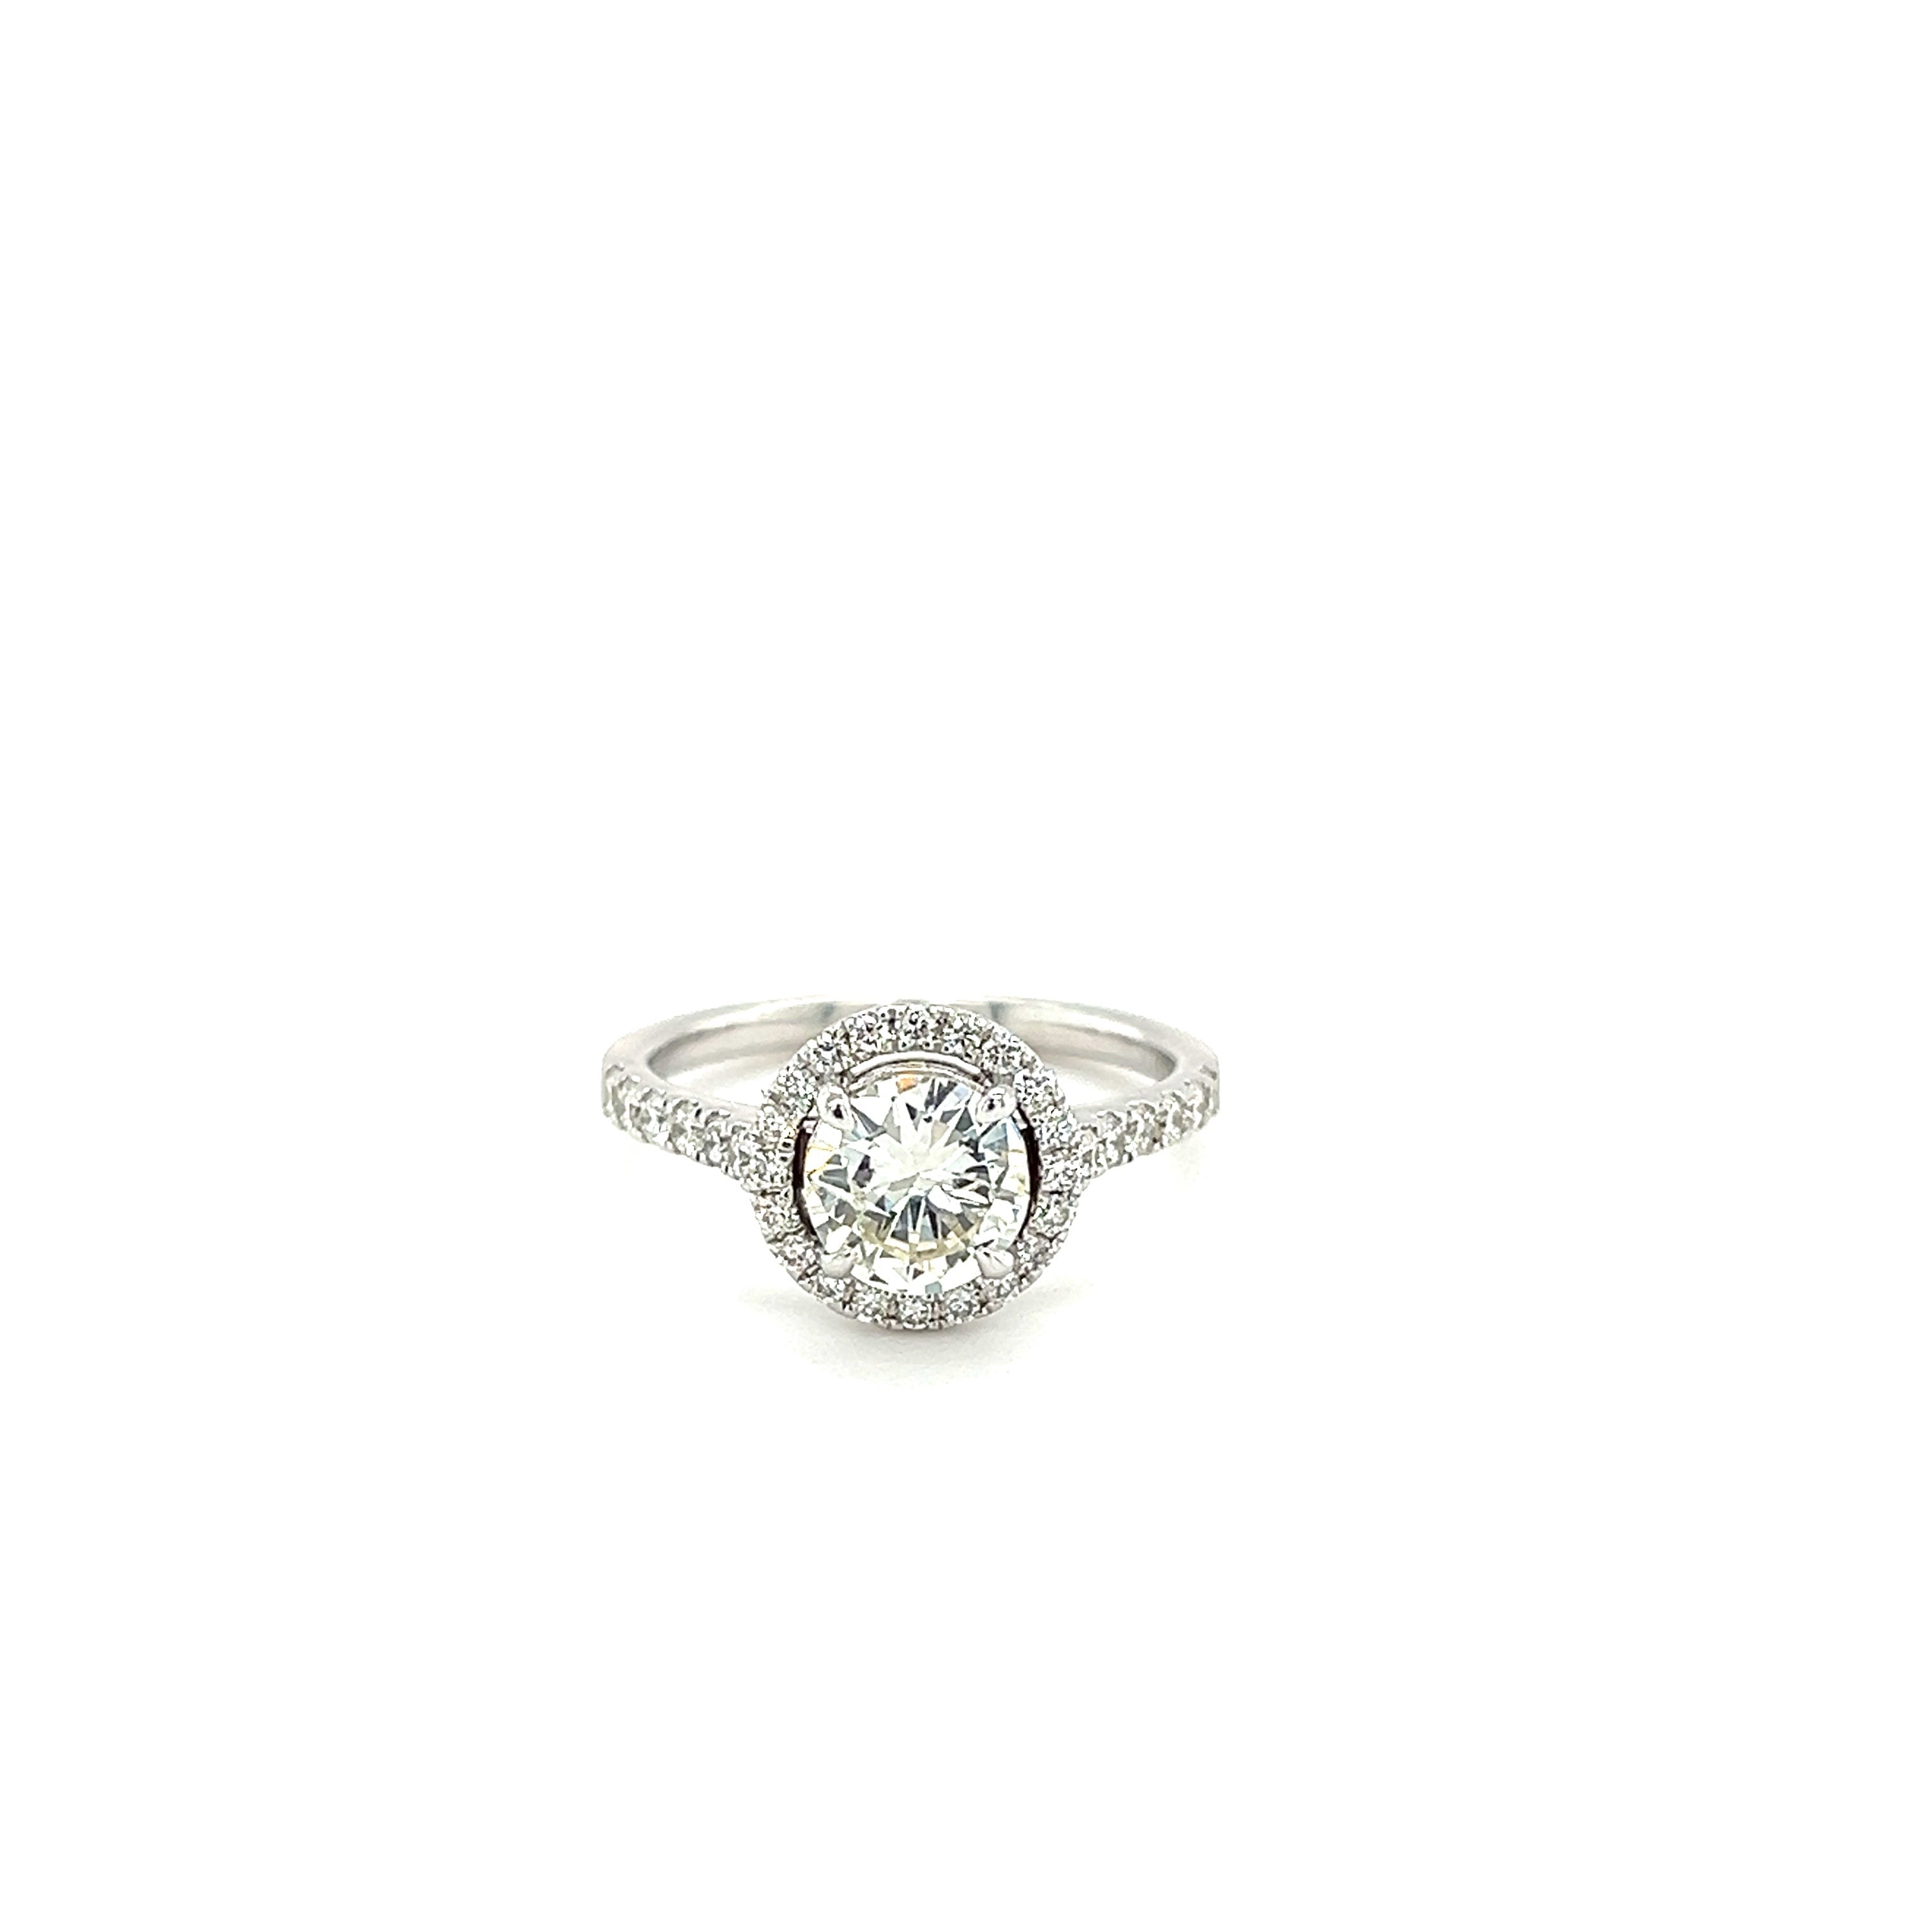 White Gold 14k Round Diamond 0.88 ctw Engagement Ring | I&I Diamonds in Coconut Creek, FL